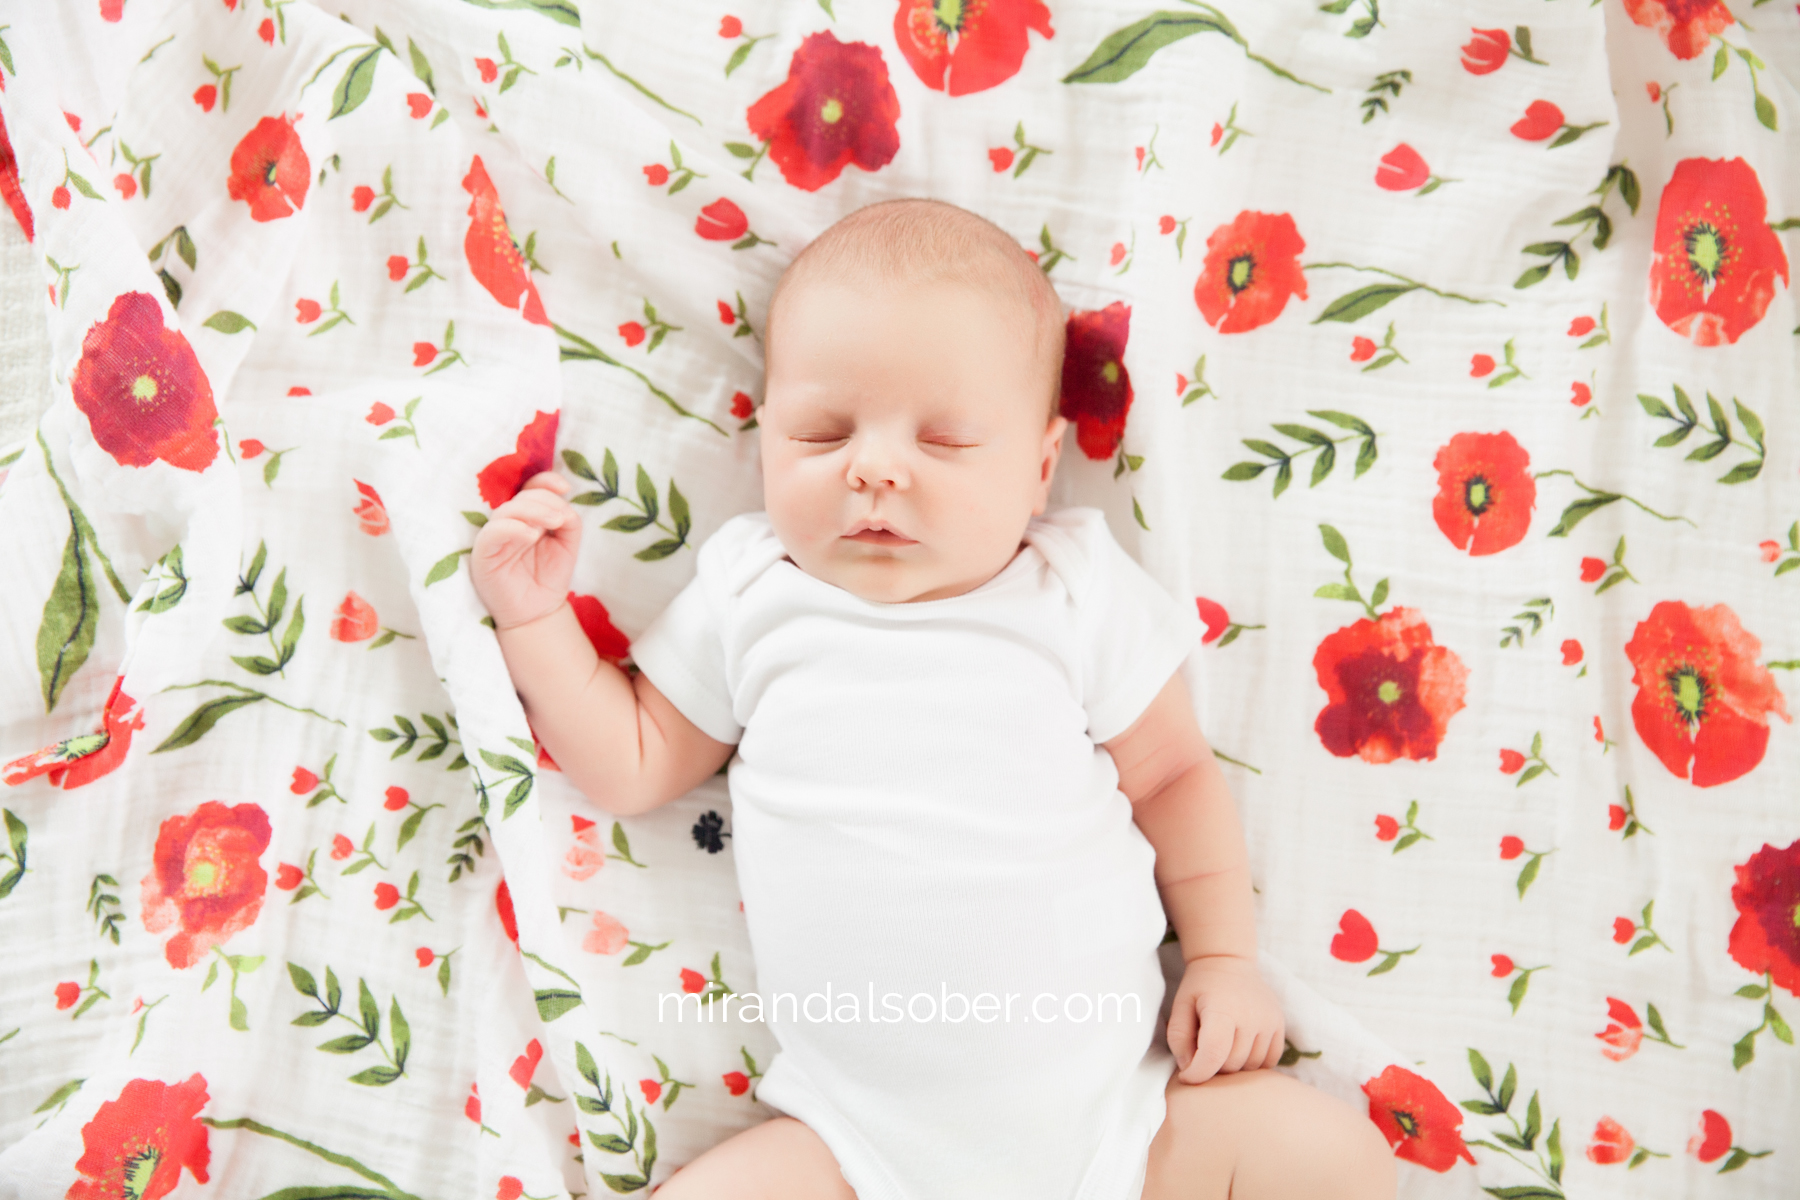 Newborn Photographers Fort Collins, Miranda L. Sober Photography, lifestyle baby photography